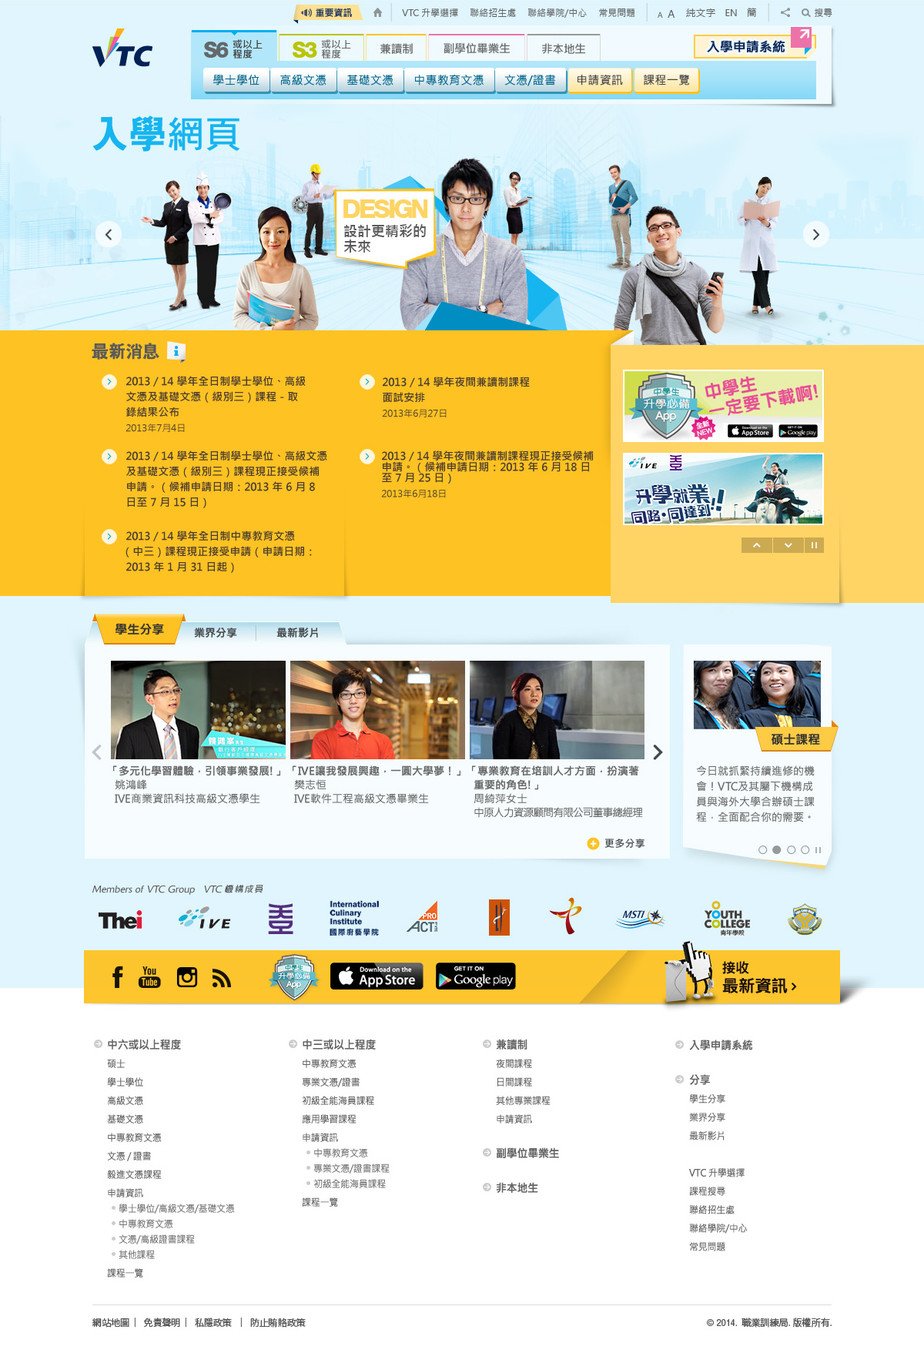 Vocational Training Council website screenshot for desktop version 5 of 8